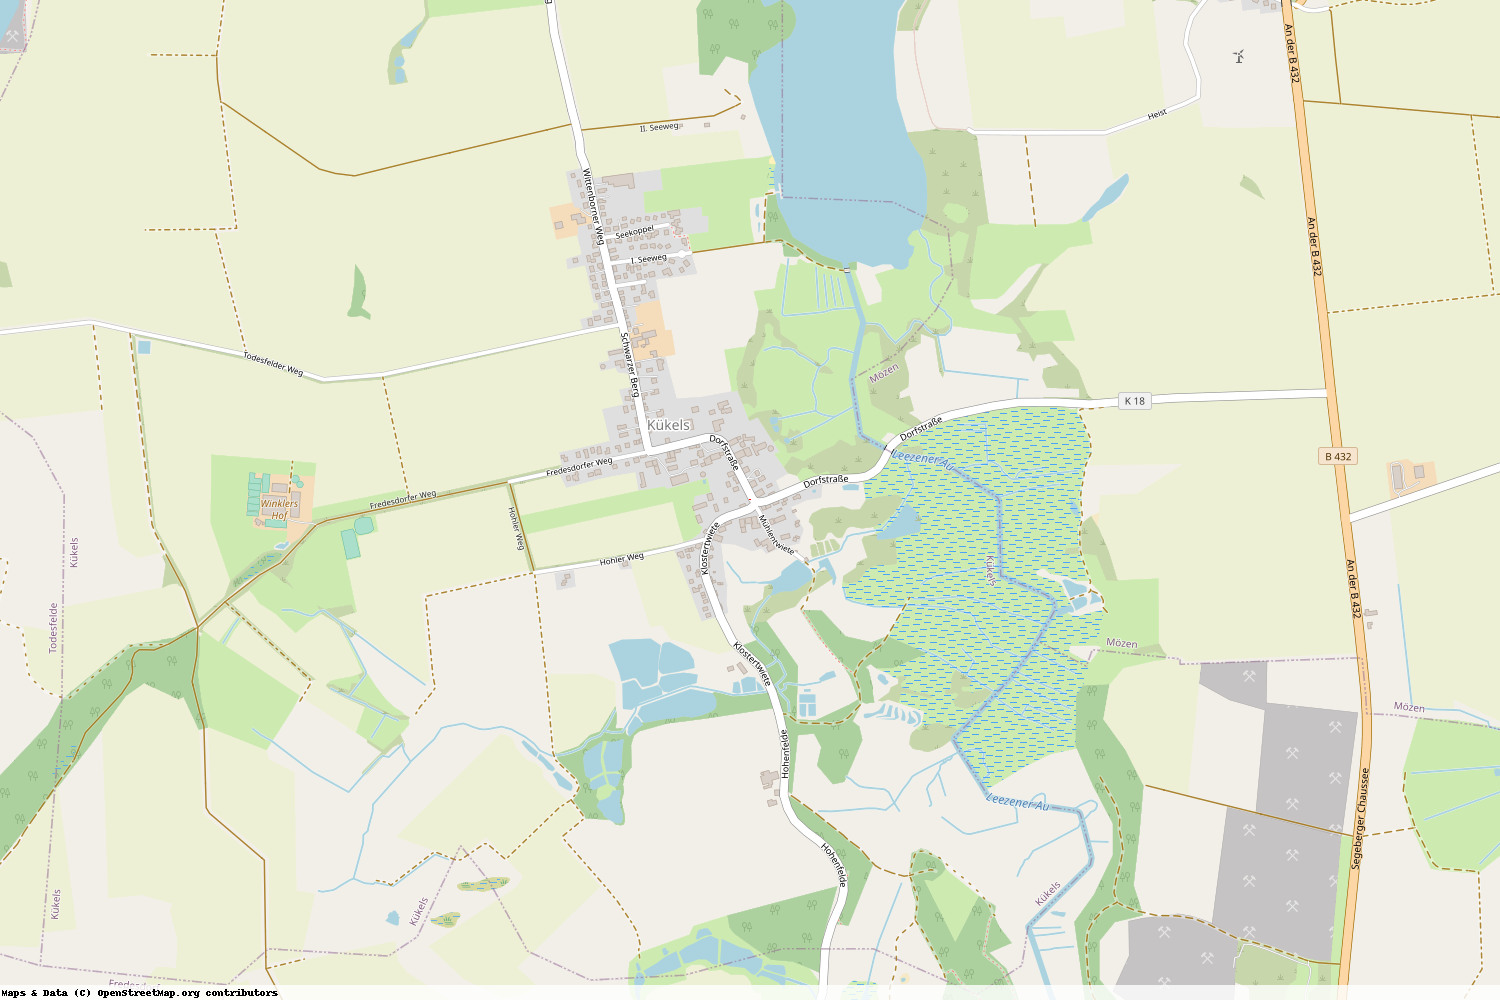 Ist gerade Stromausfall in Schleswig-Holstein - Segeberg - Kükels?